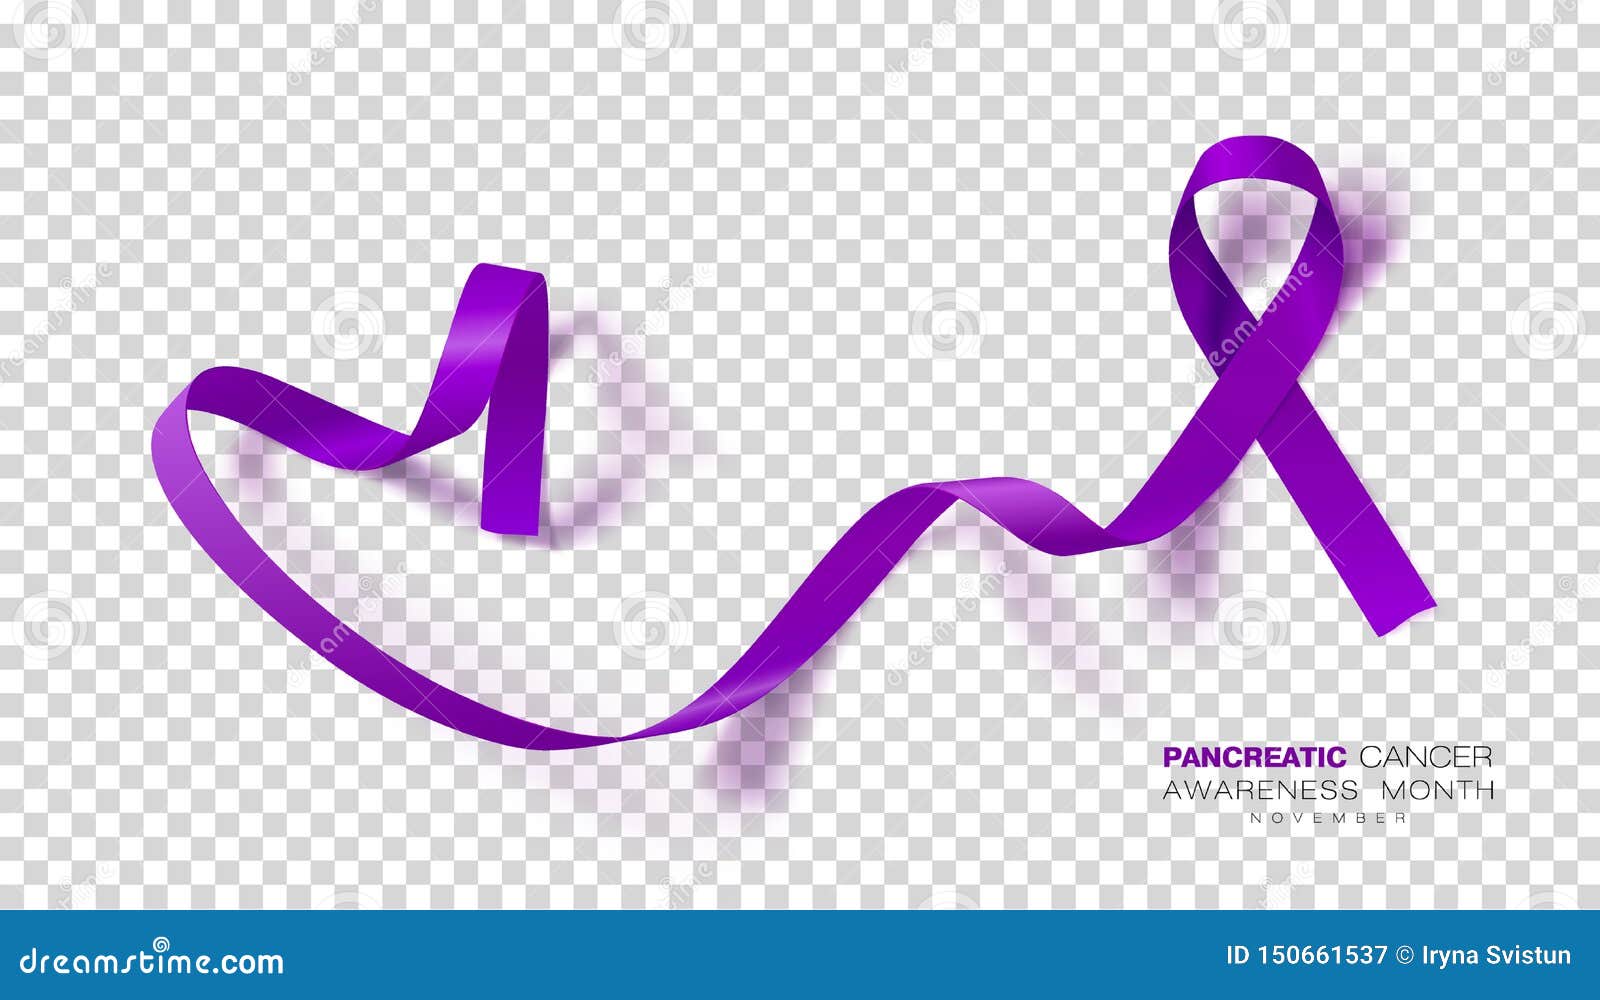 Purple ribbon pancreatic cancer awareness Vector Image